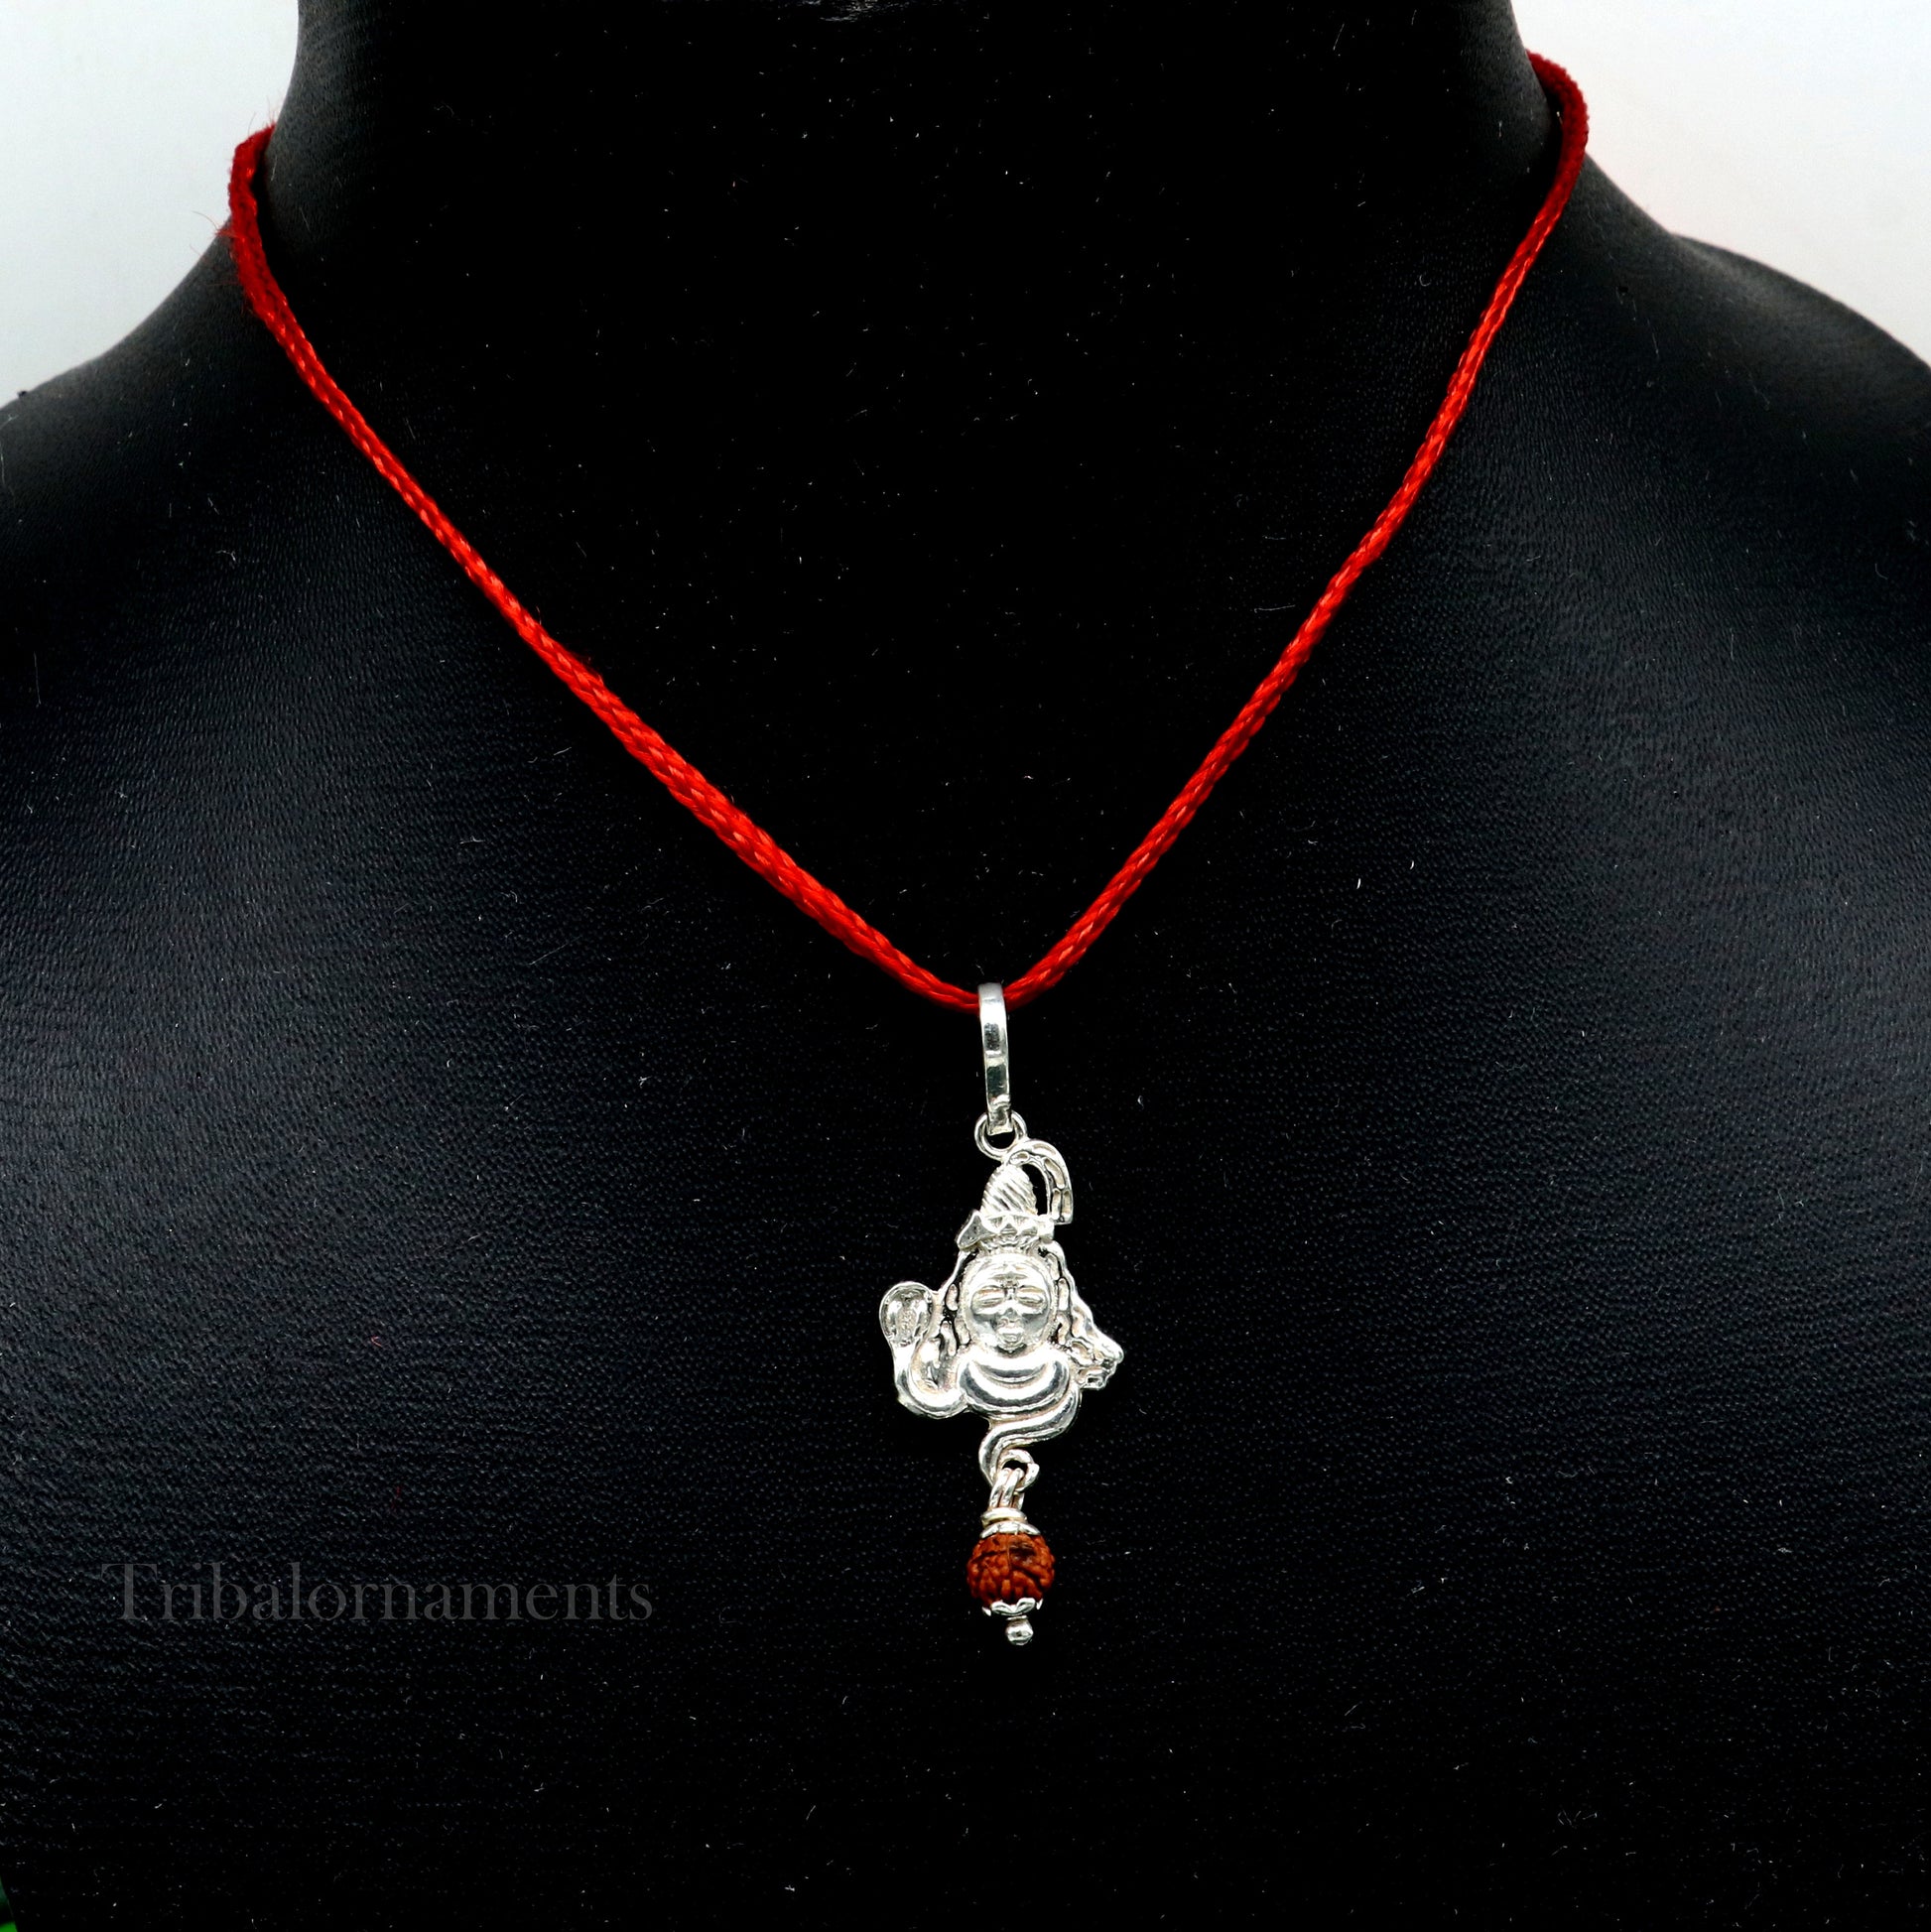 Solid sterling silver amazing designer Hindu idol Lord Shiva pendant with hanging rudraksha excellent locket pendant custom jewelry ssp1121 - TRIBAL ORNAMENTS